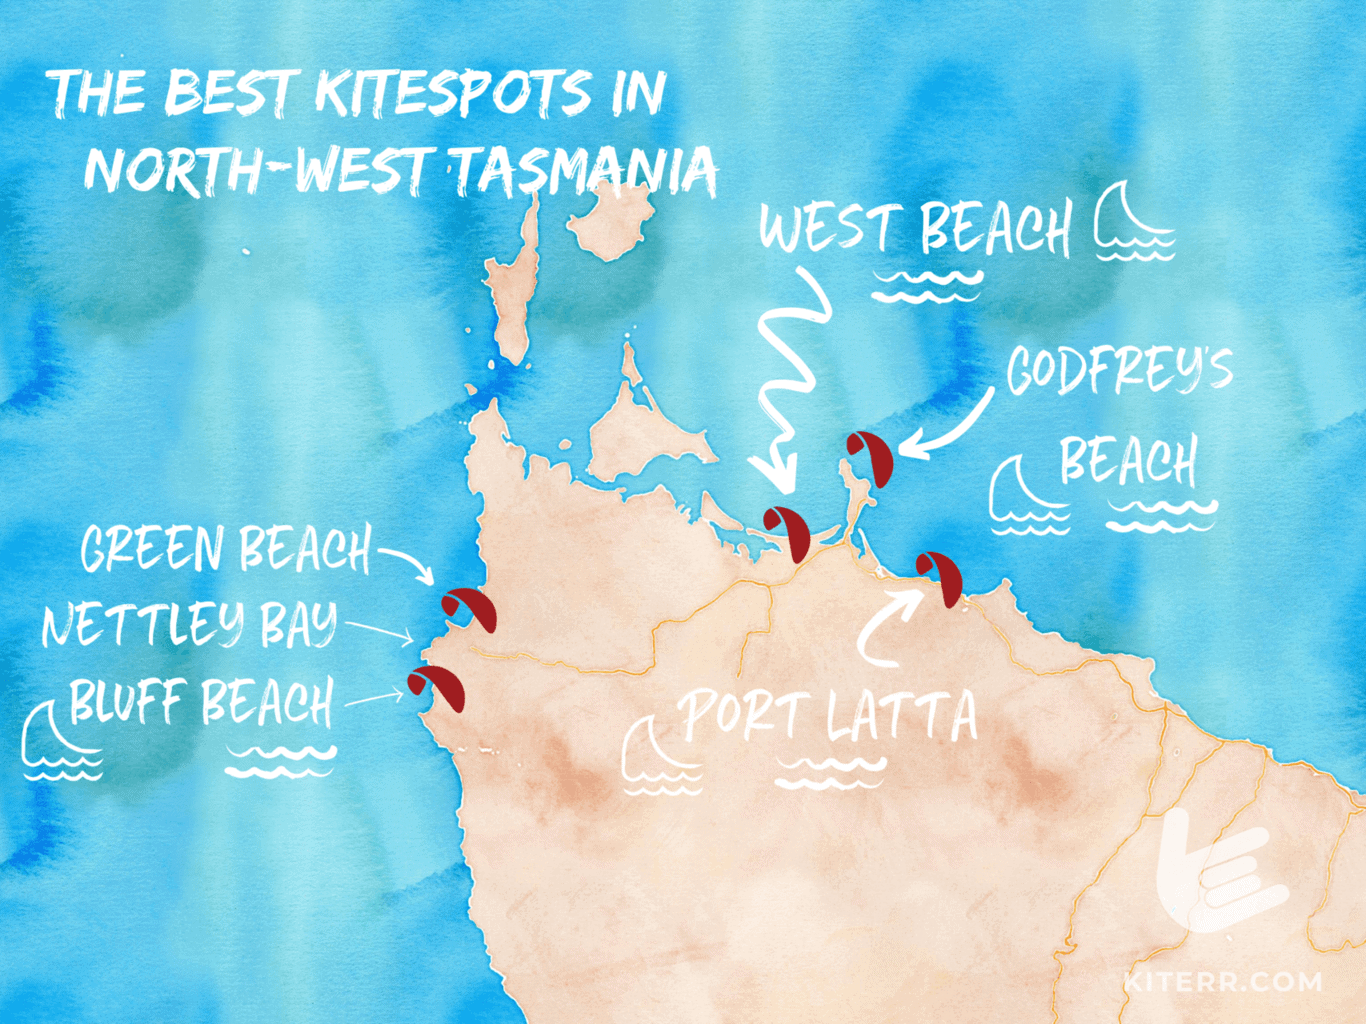 The best kitesurfing spots in North-West Tasmania // Kiterr.com